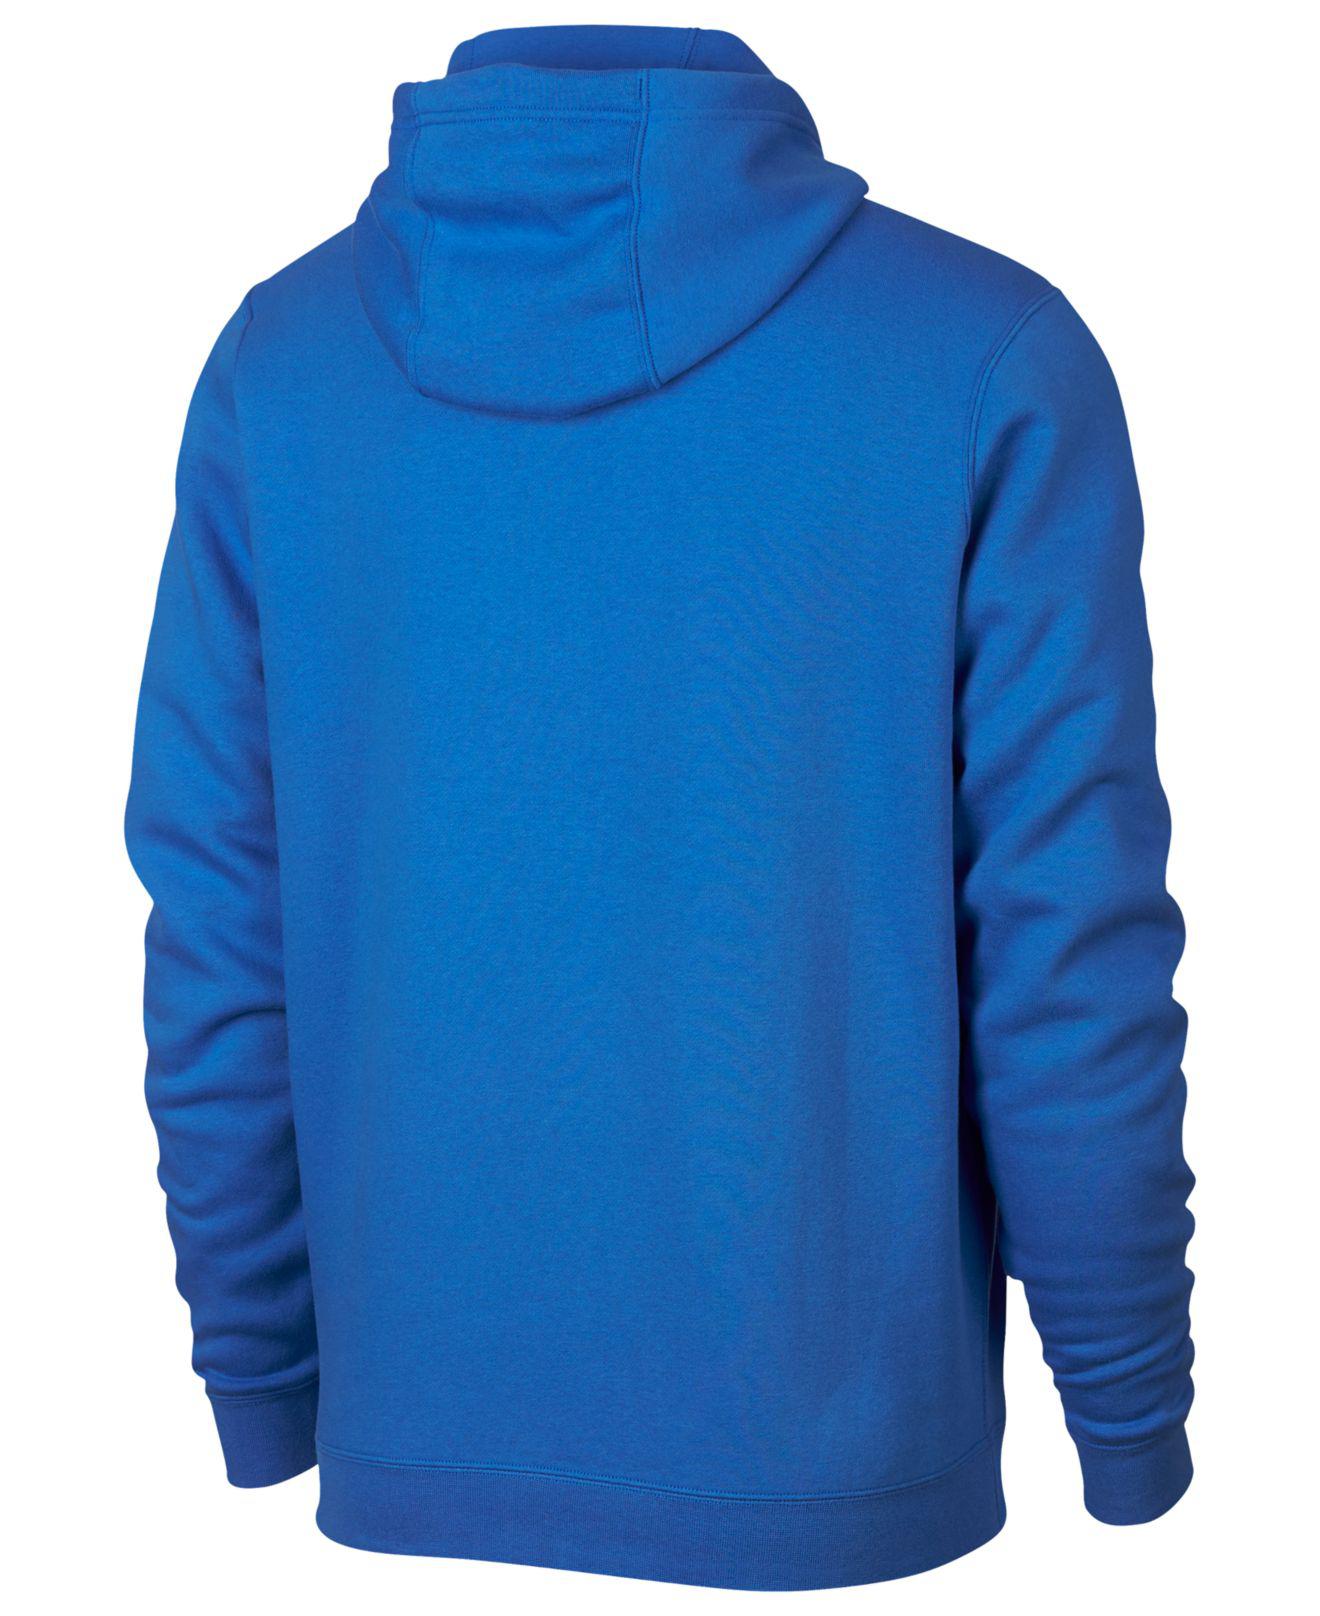 just do it blue hoodie